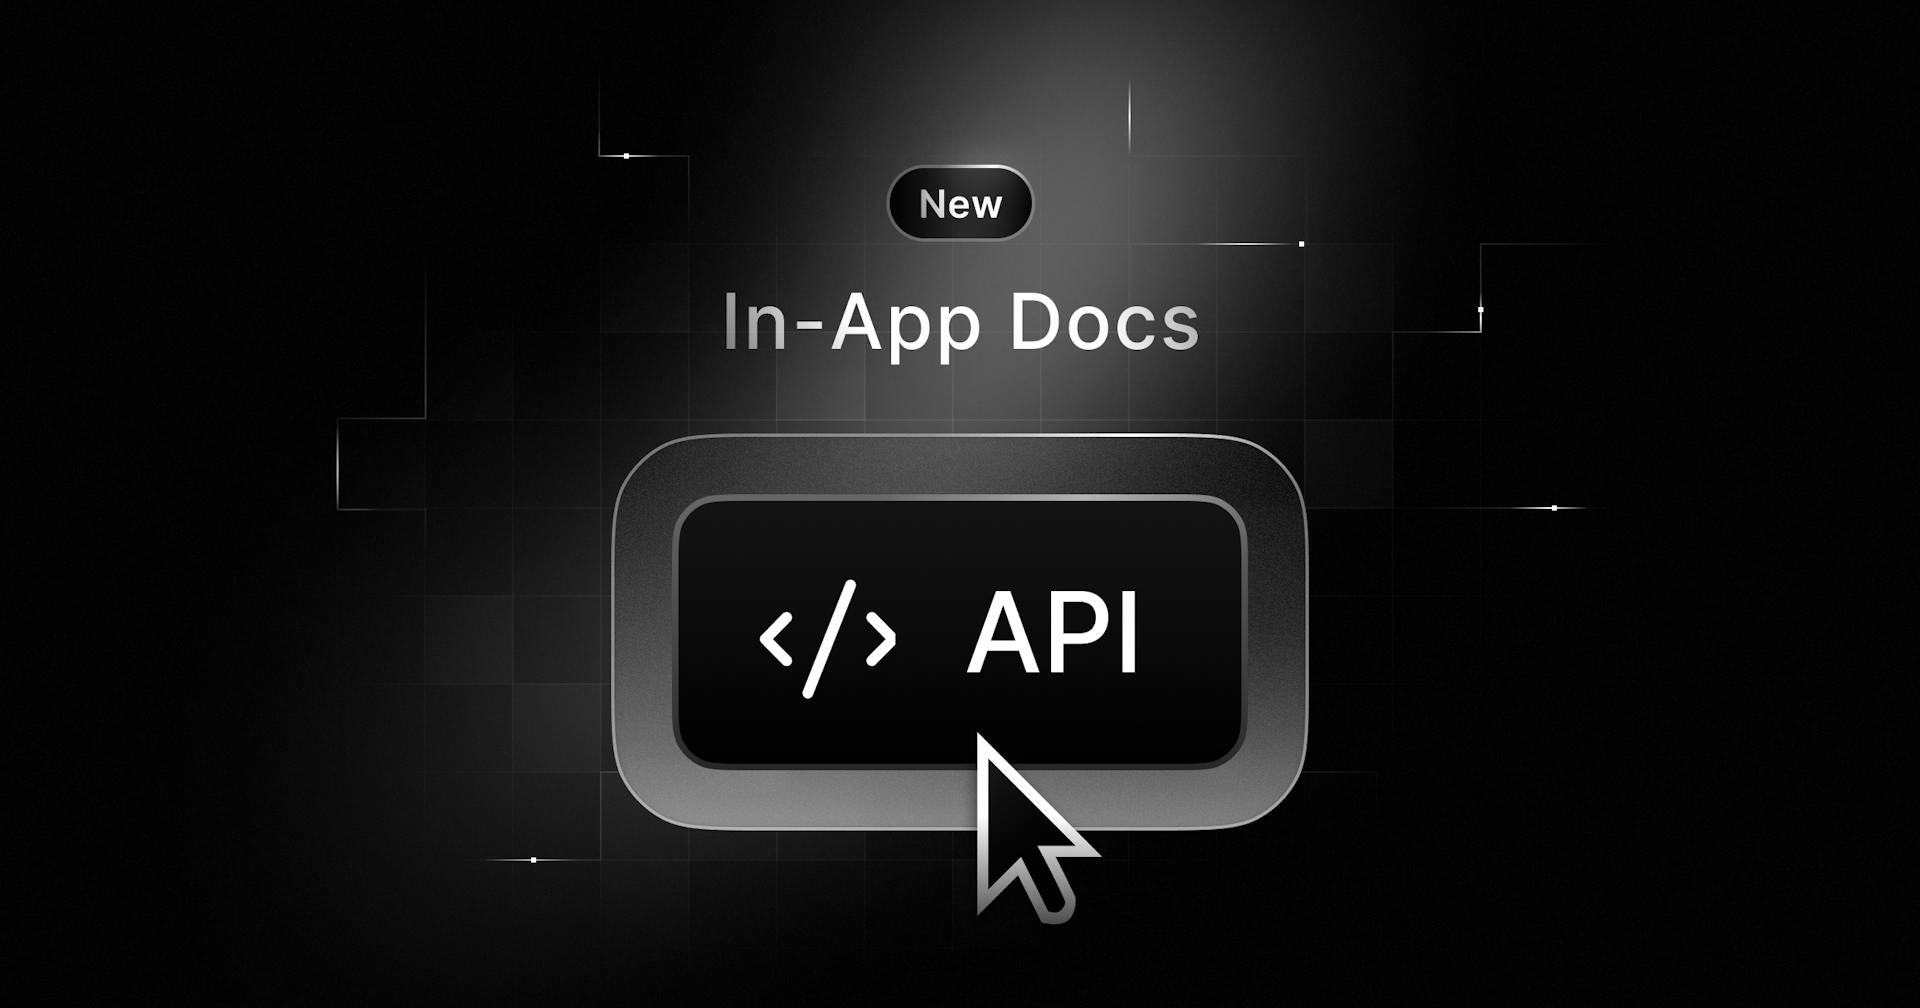 In-App Docs